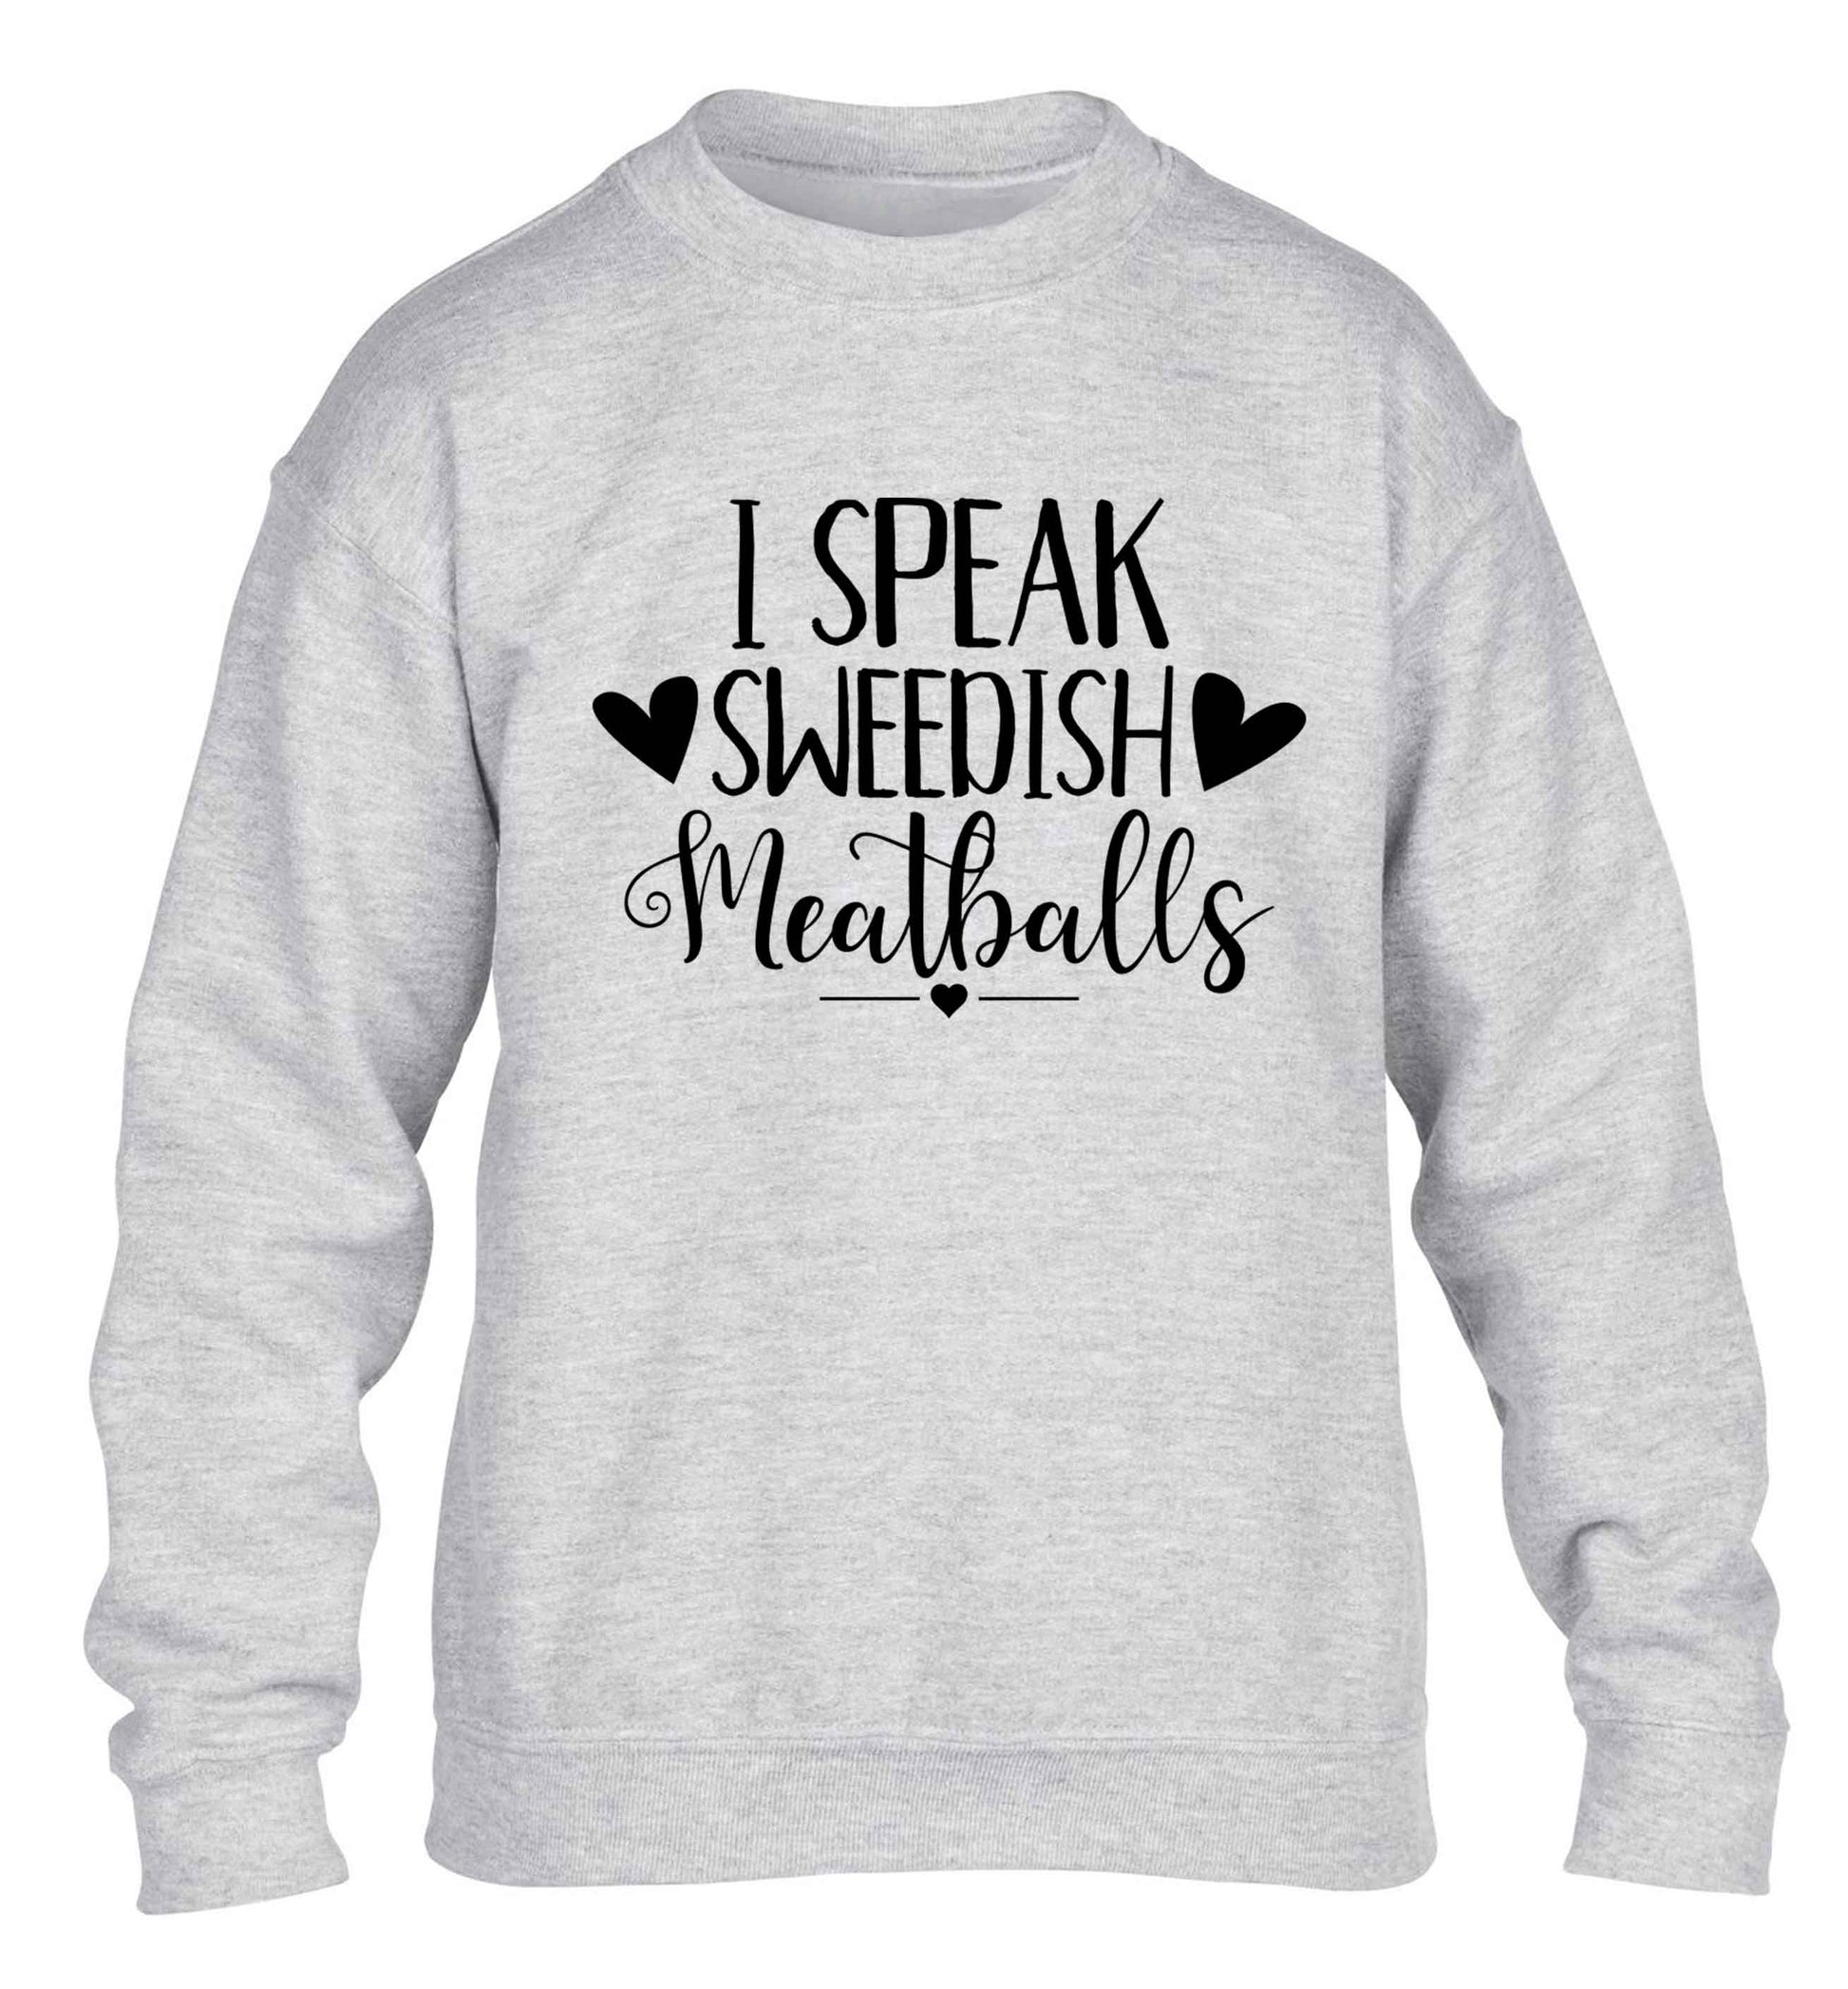 I speak sweedish...meatballs children's grey sweater 12-13 Years